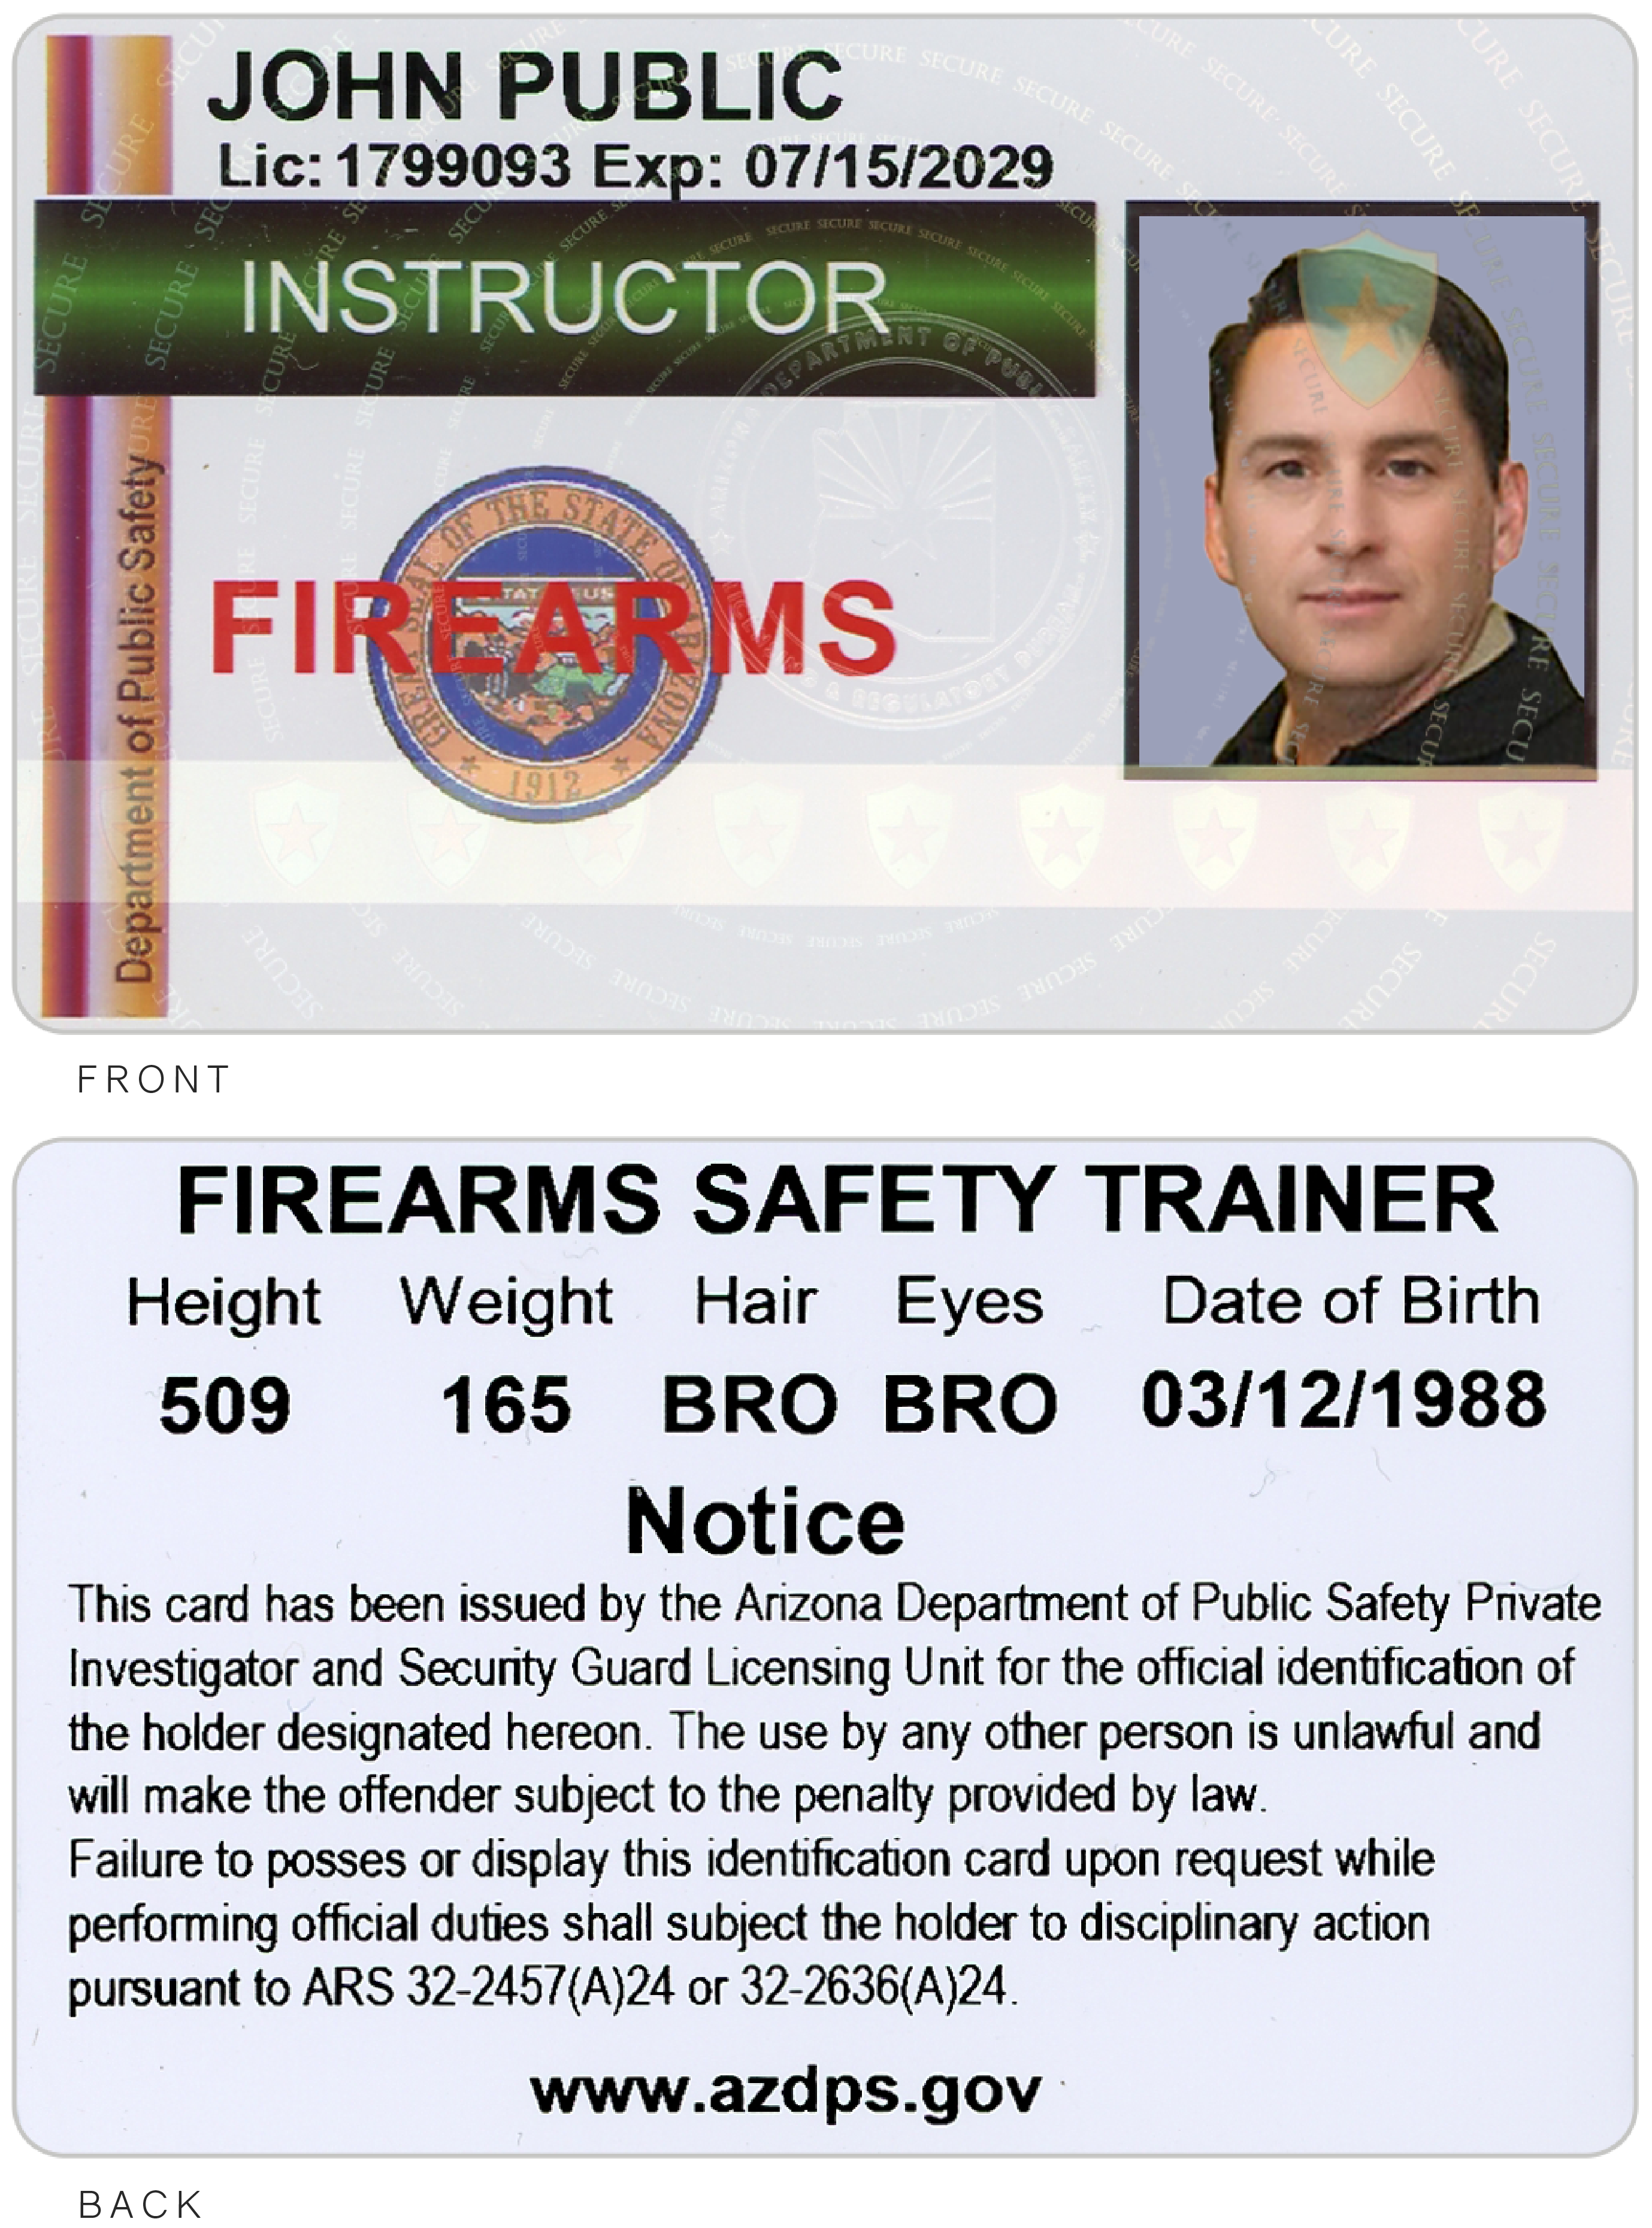 Legacy Firearms Card